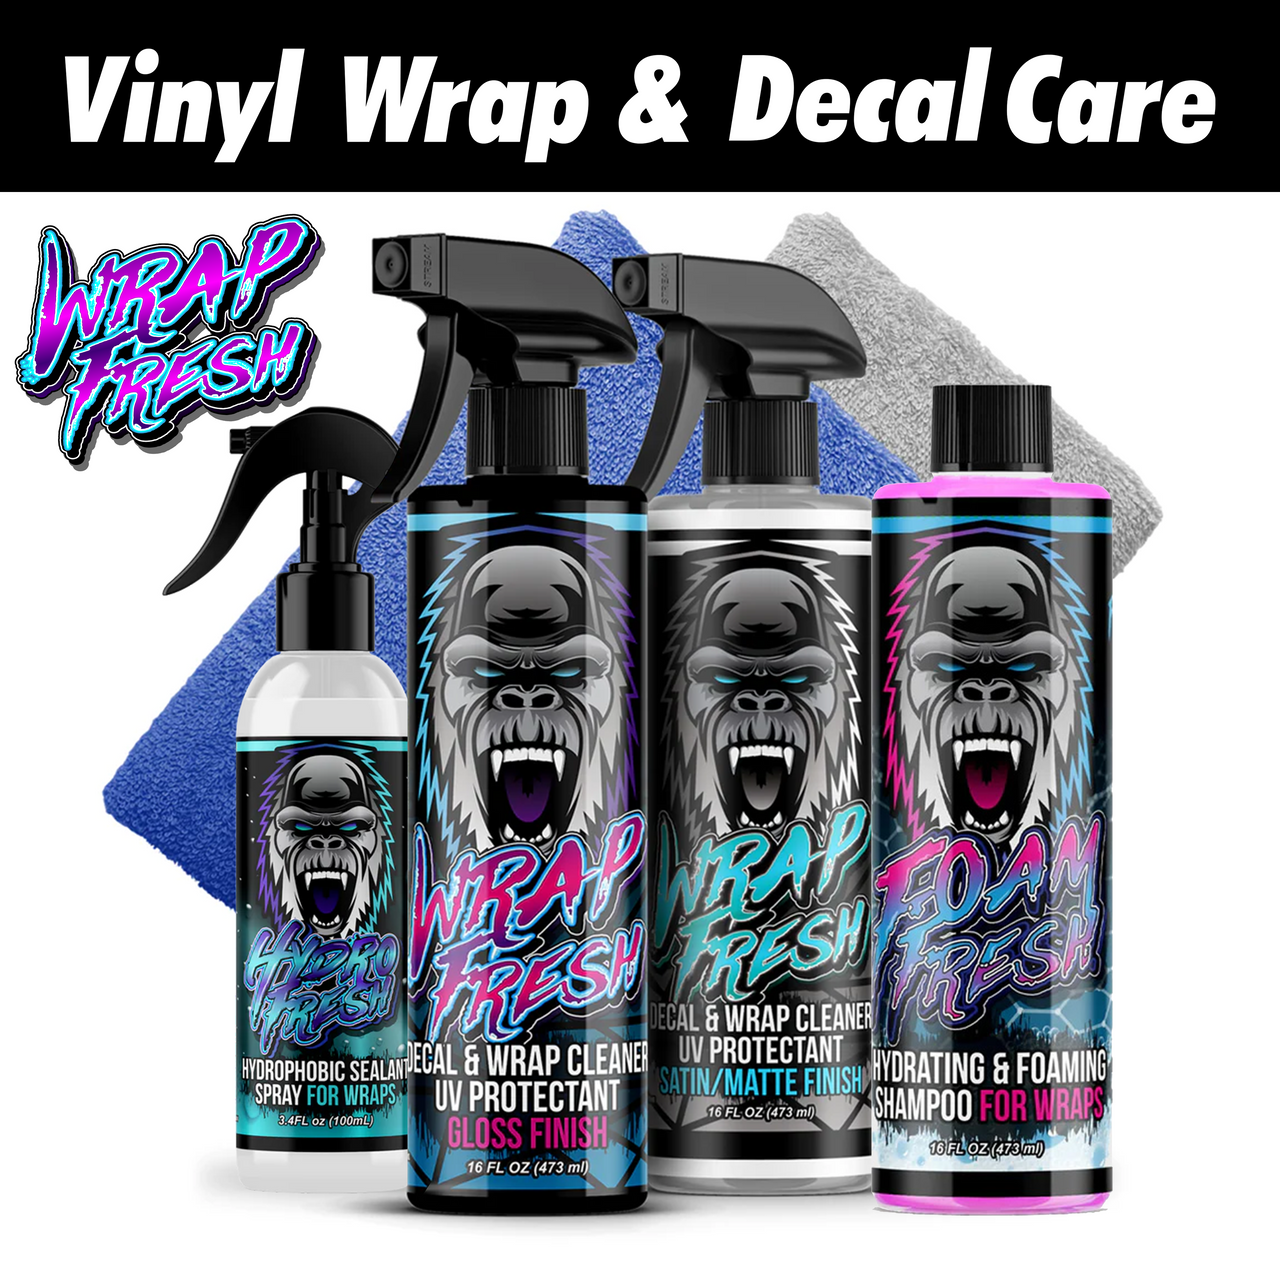 Vinyl Wrap & Decal Care